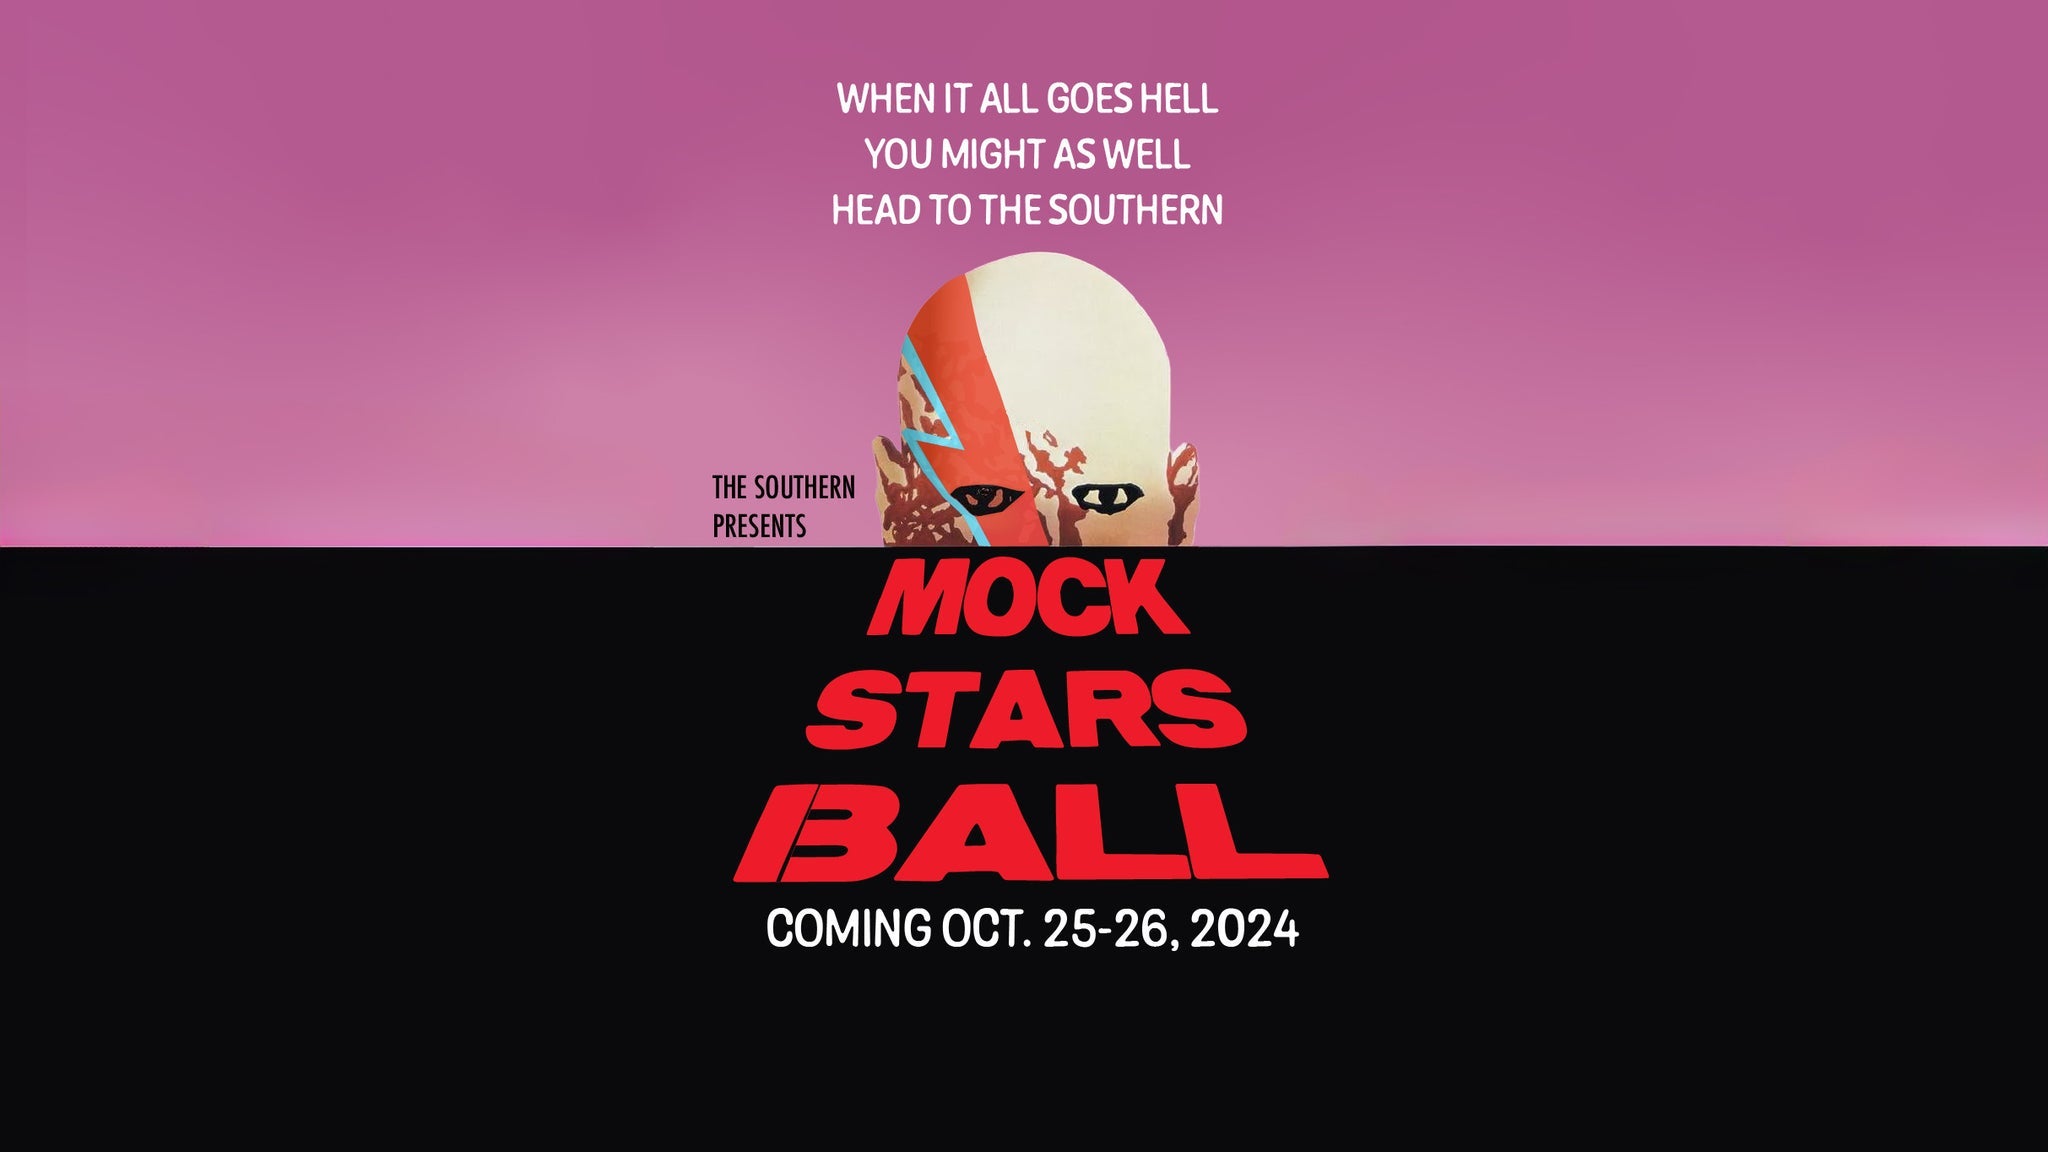 MOCK STAR'S BALL 2024! - 2 Day Ticket (10/25 & 10/26)